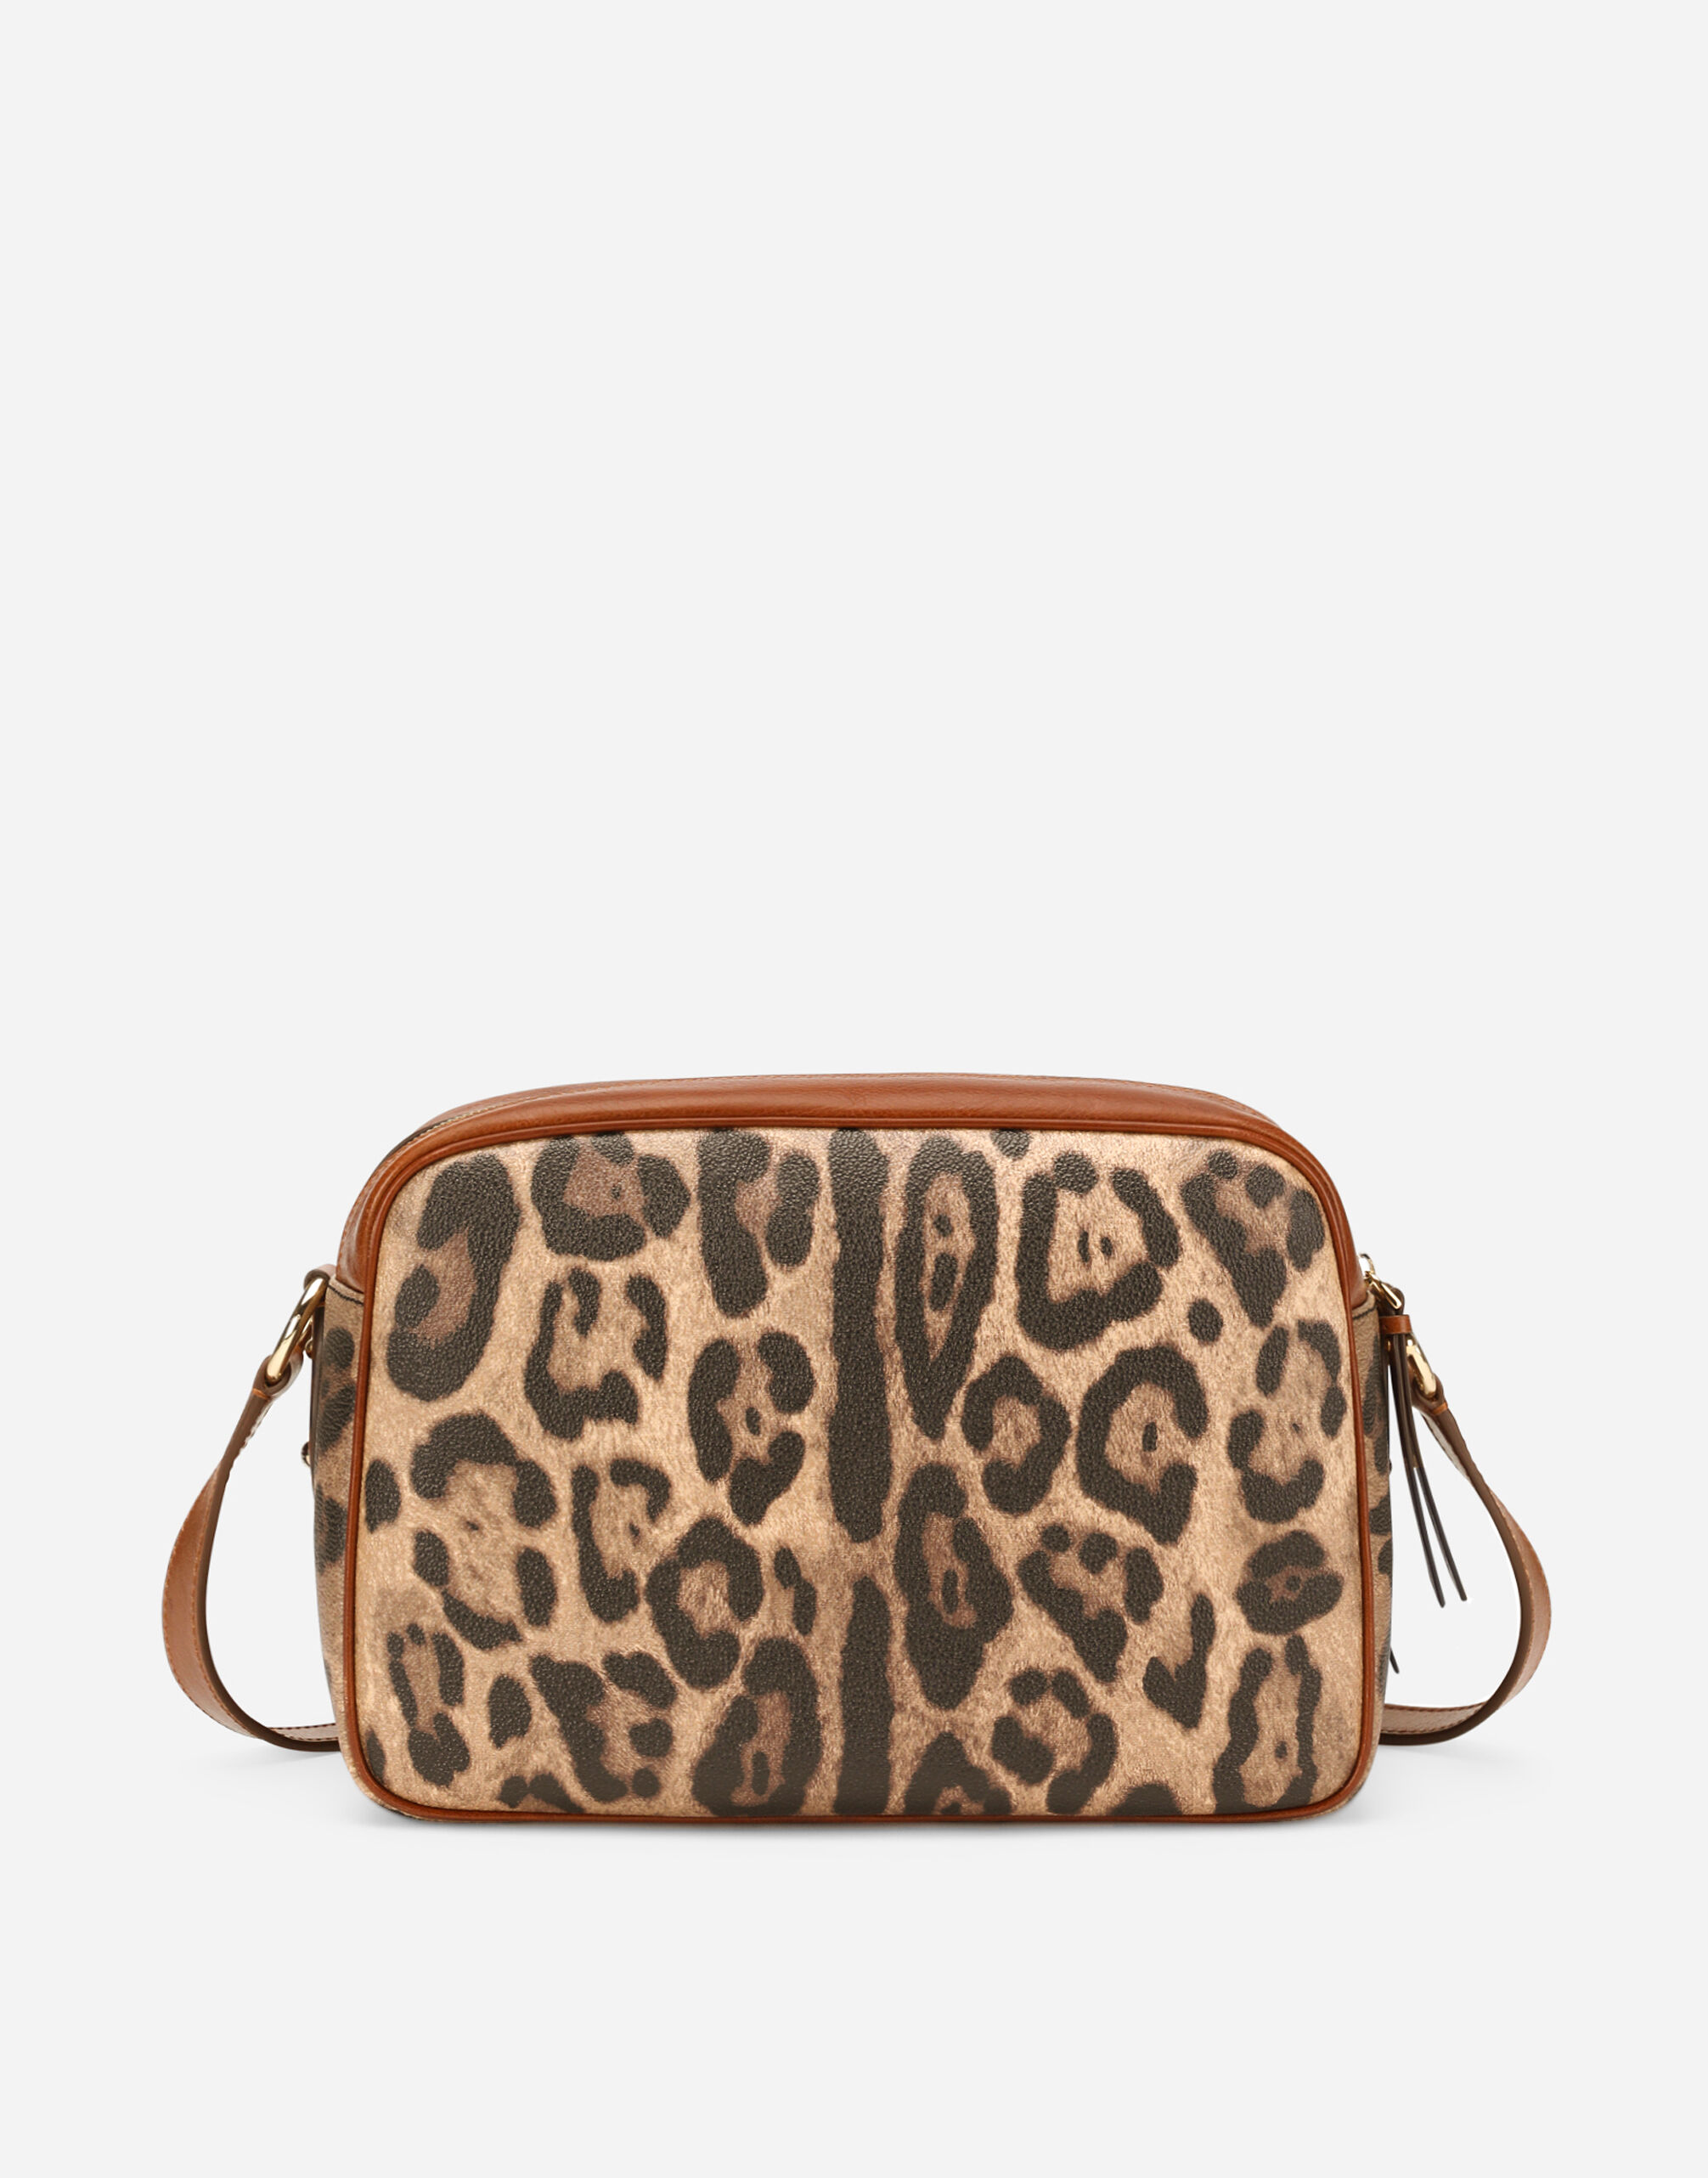 Leopard-print Crespo handbag with branded plate